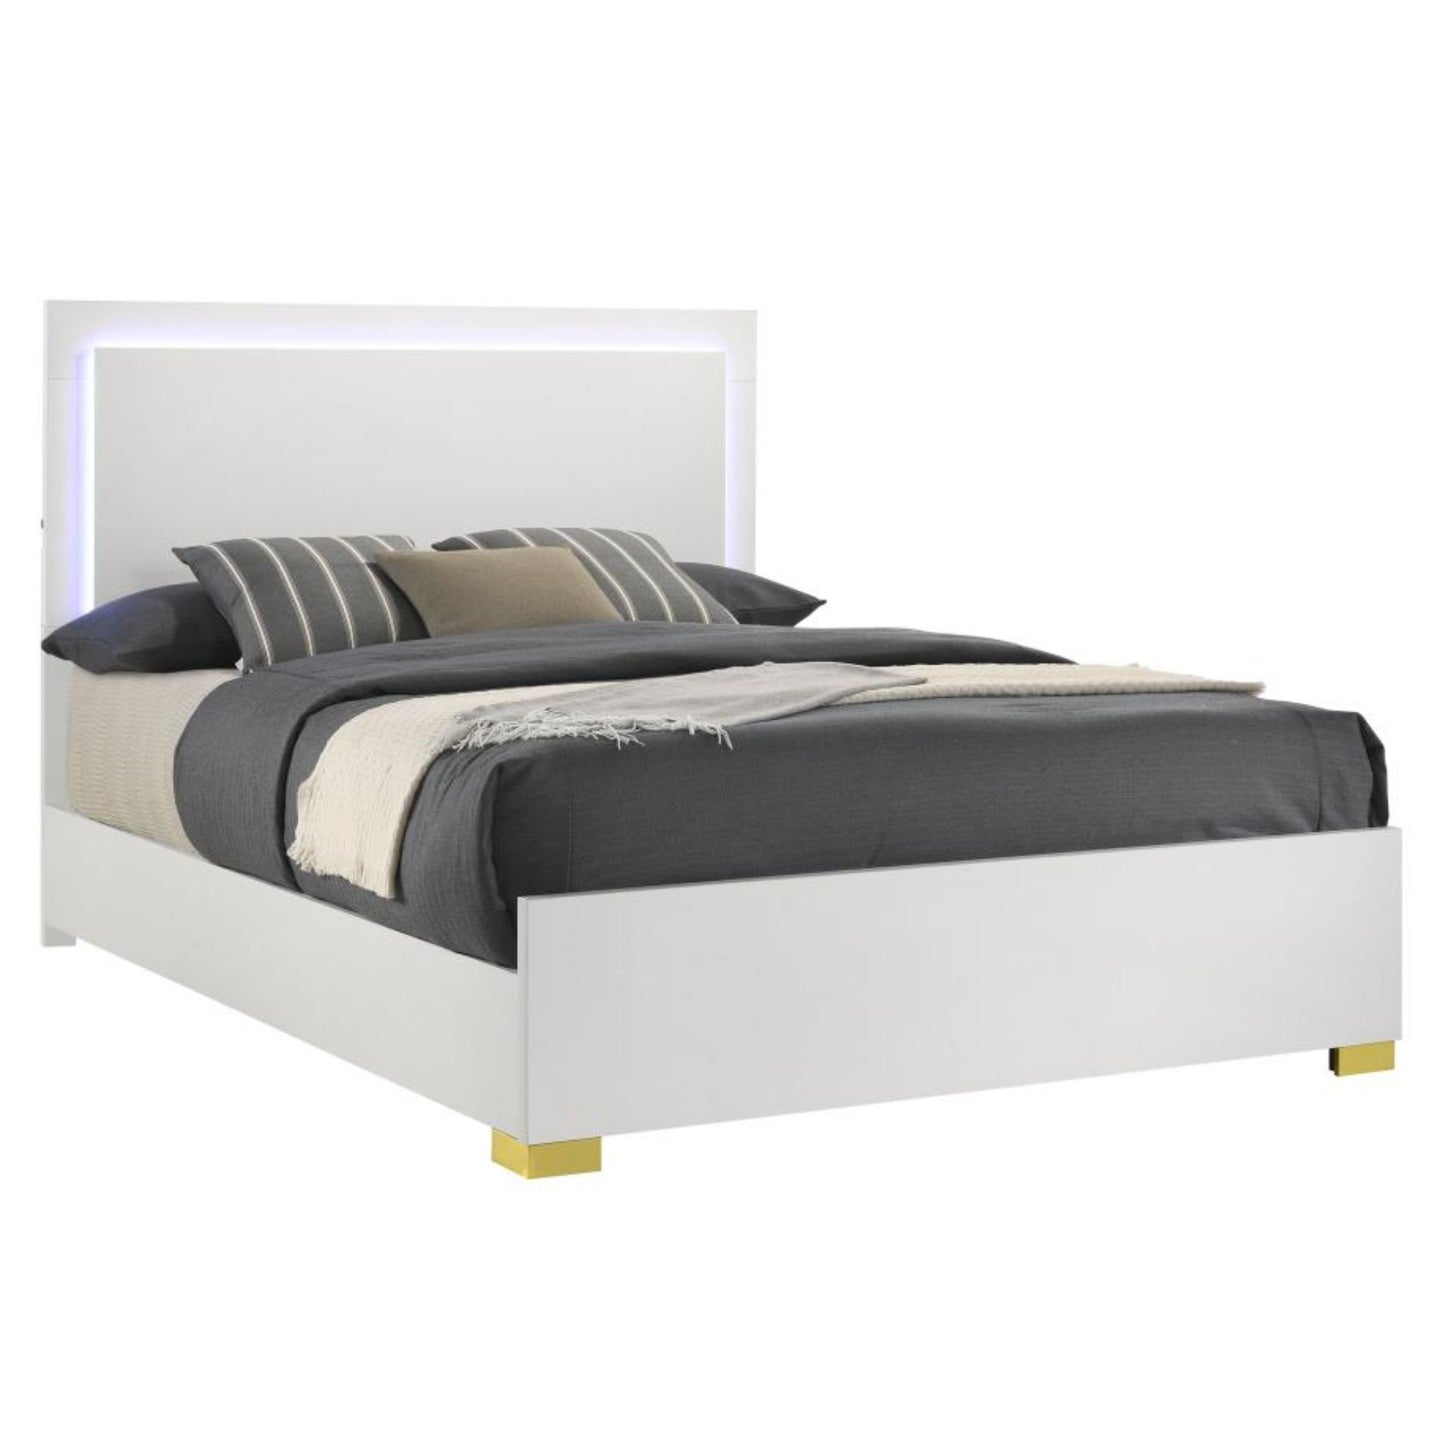 MARCELINE 4-piece Eastern King Bedroom Set with LED Headboard White